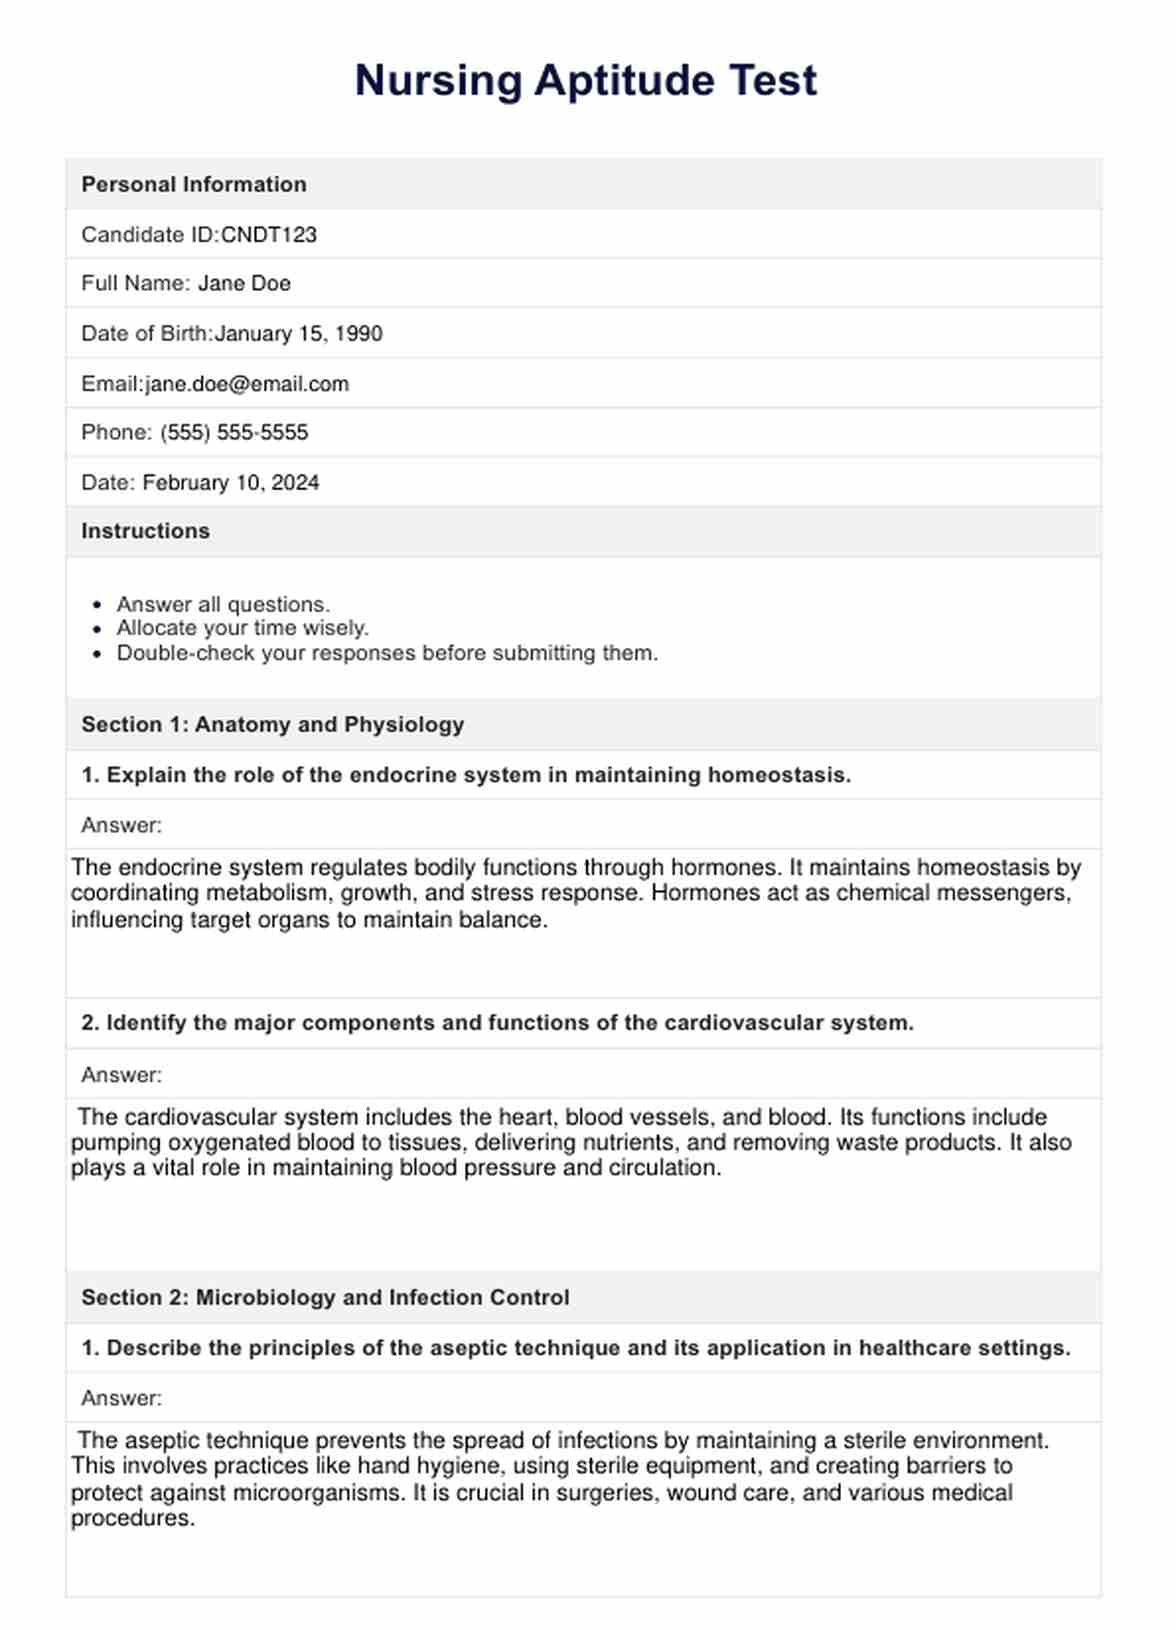 Nursing Aptitude Test PDF Example